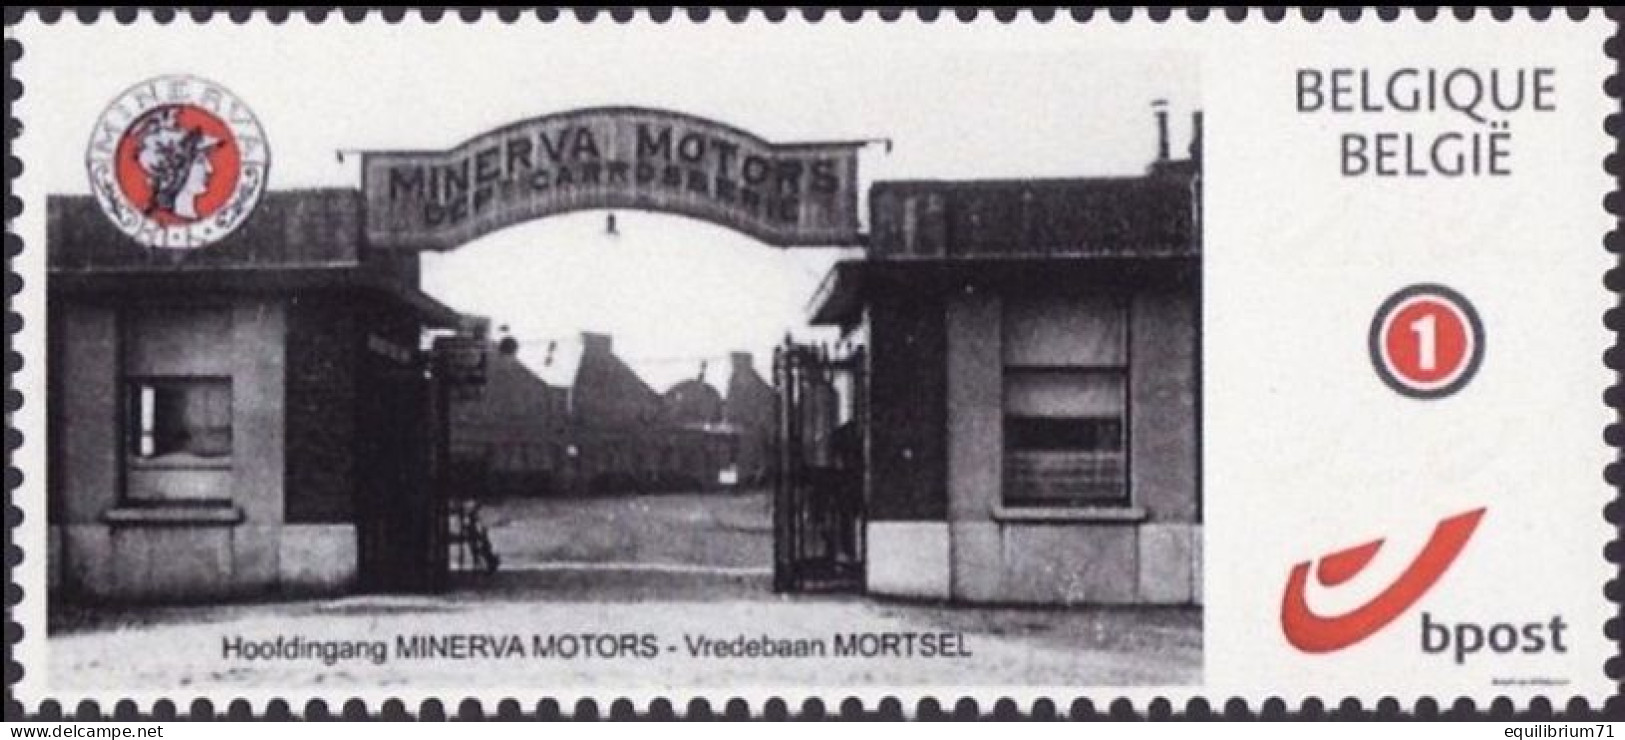 DUOSTAMP** / MYSTAMP** - Entrée De La Fabrique Minerva / Ingangspoort Minerva-fabriek - Mortsel (1924) - Postfris